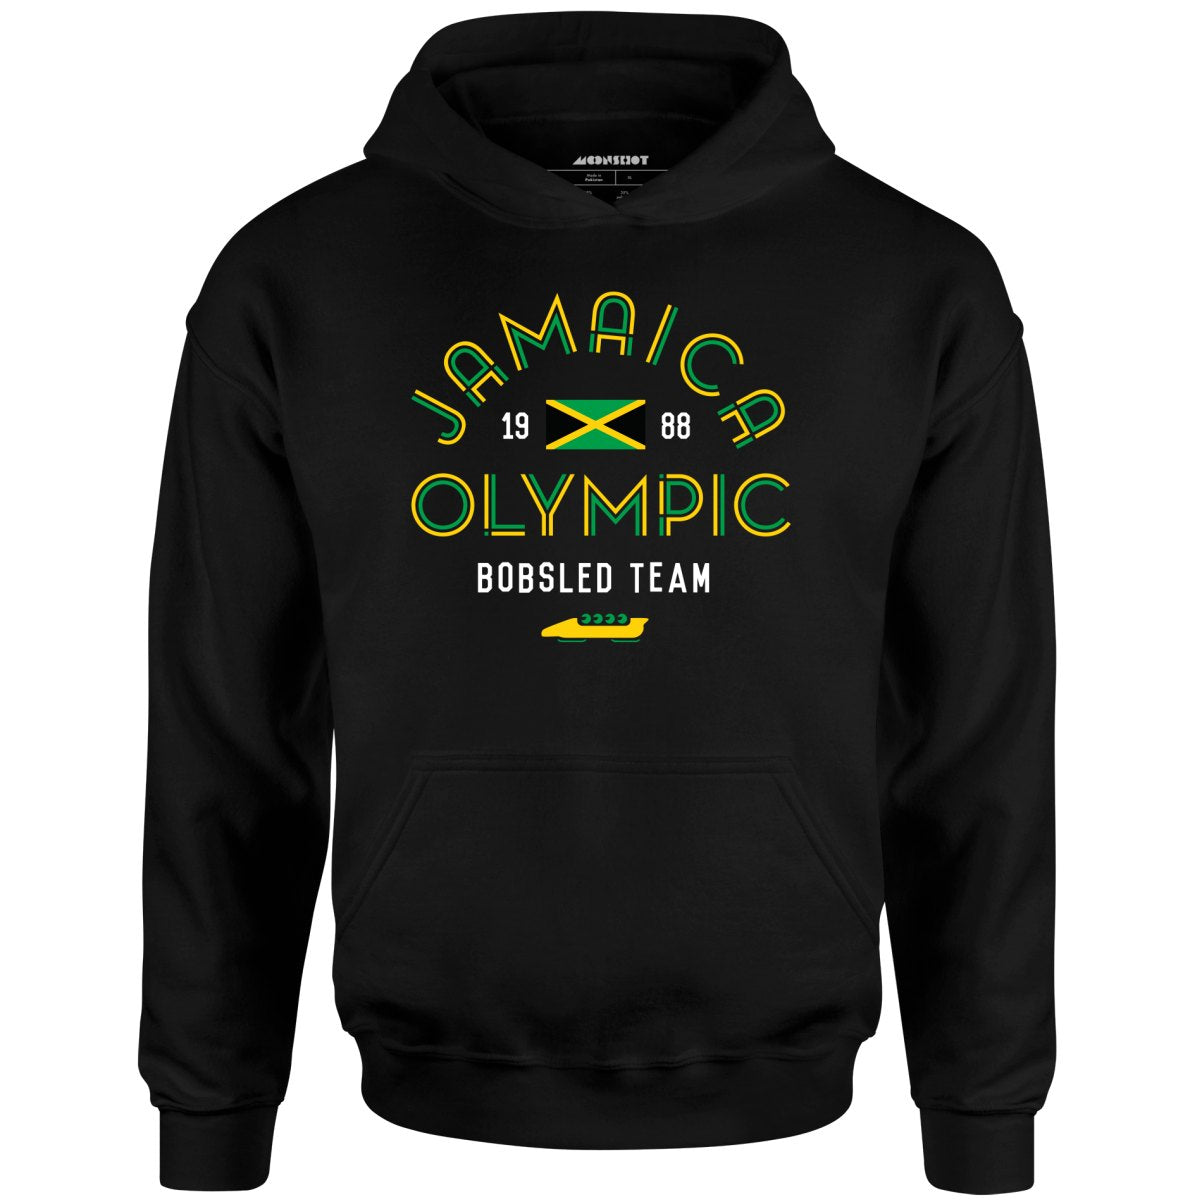 1988 Jamaica Olympic Bobsled Team - Unisex Hoodie